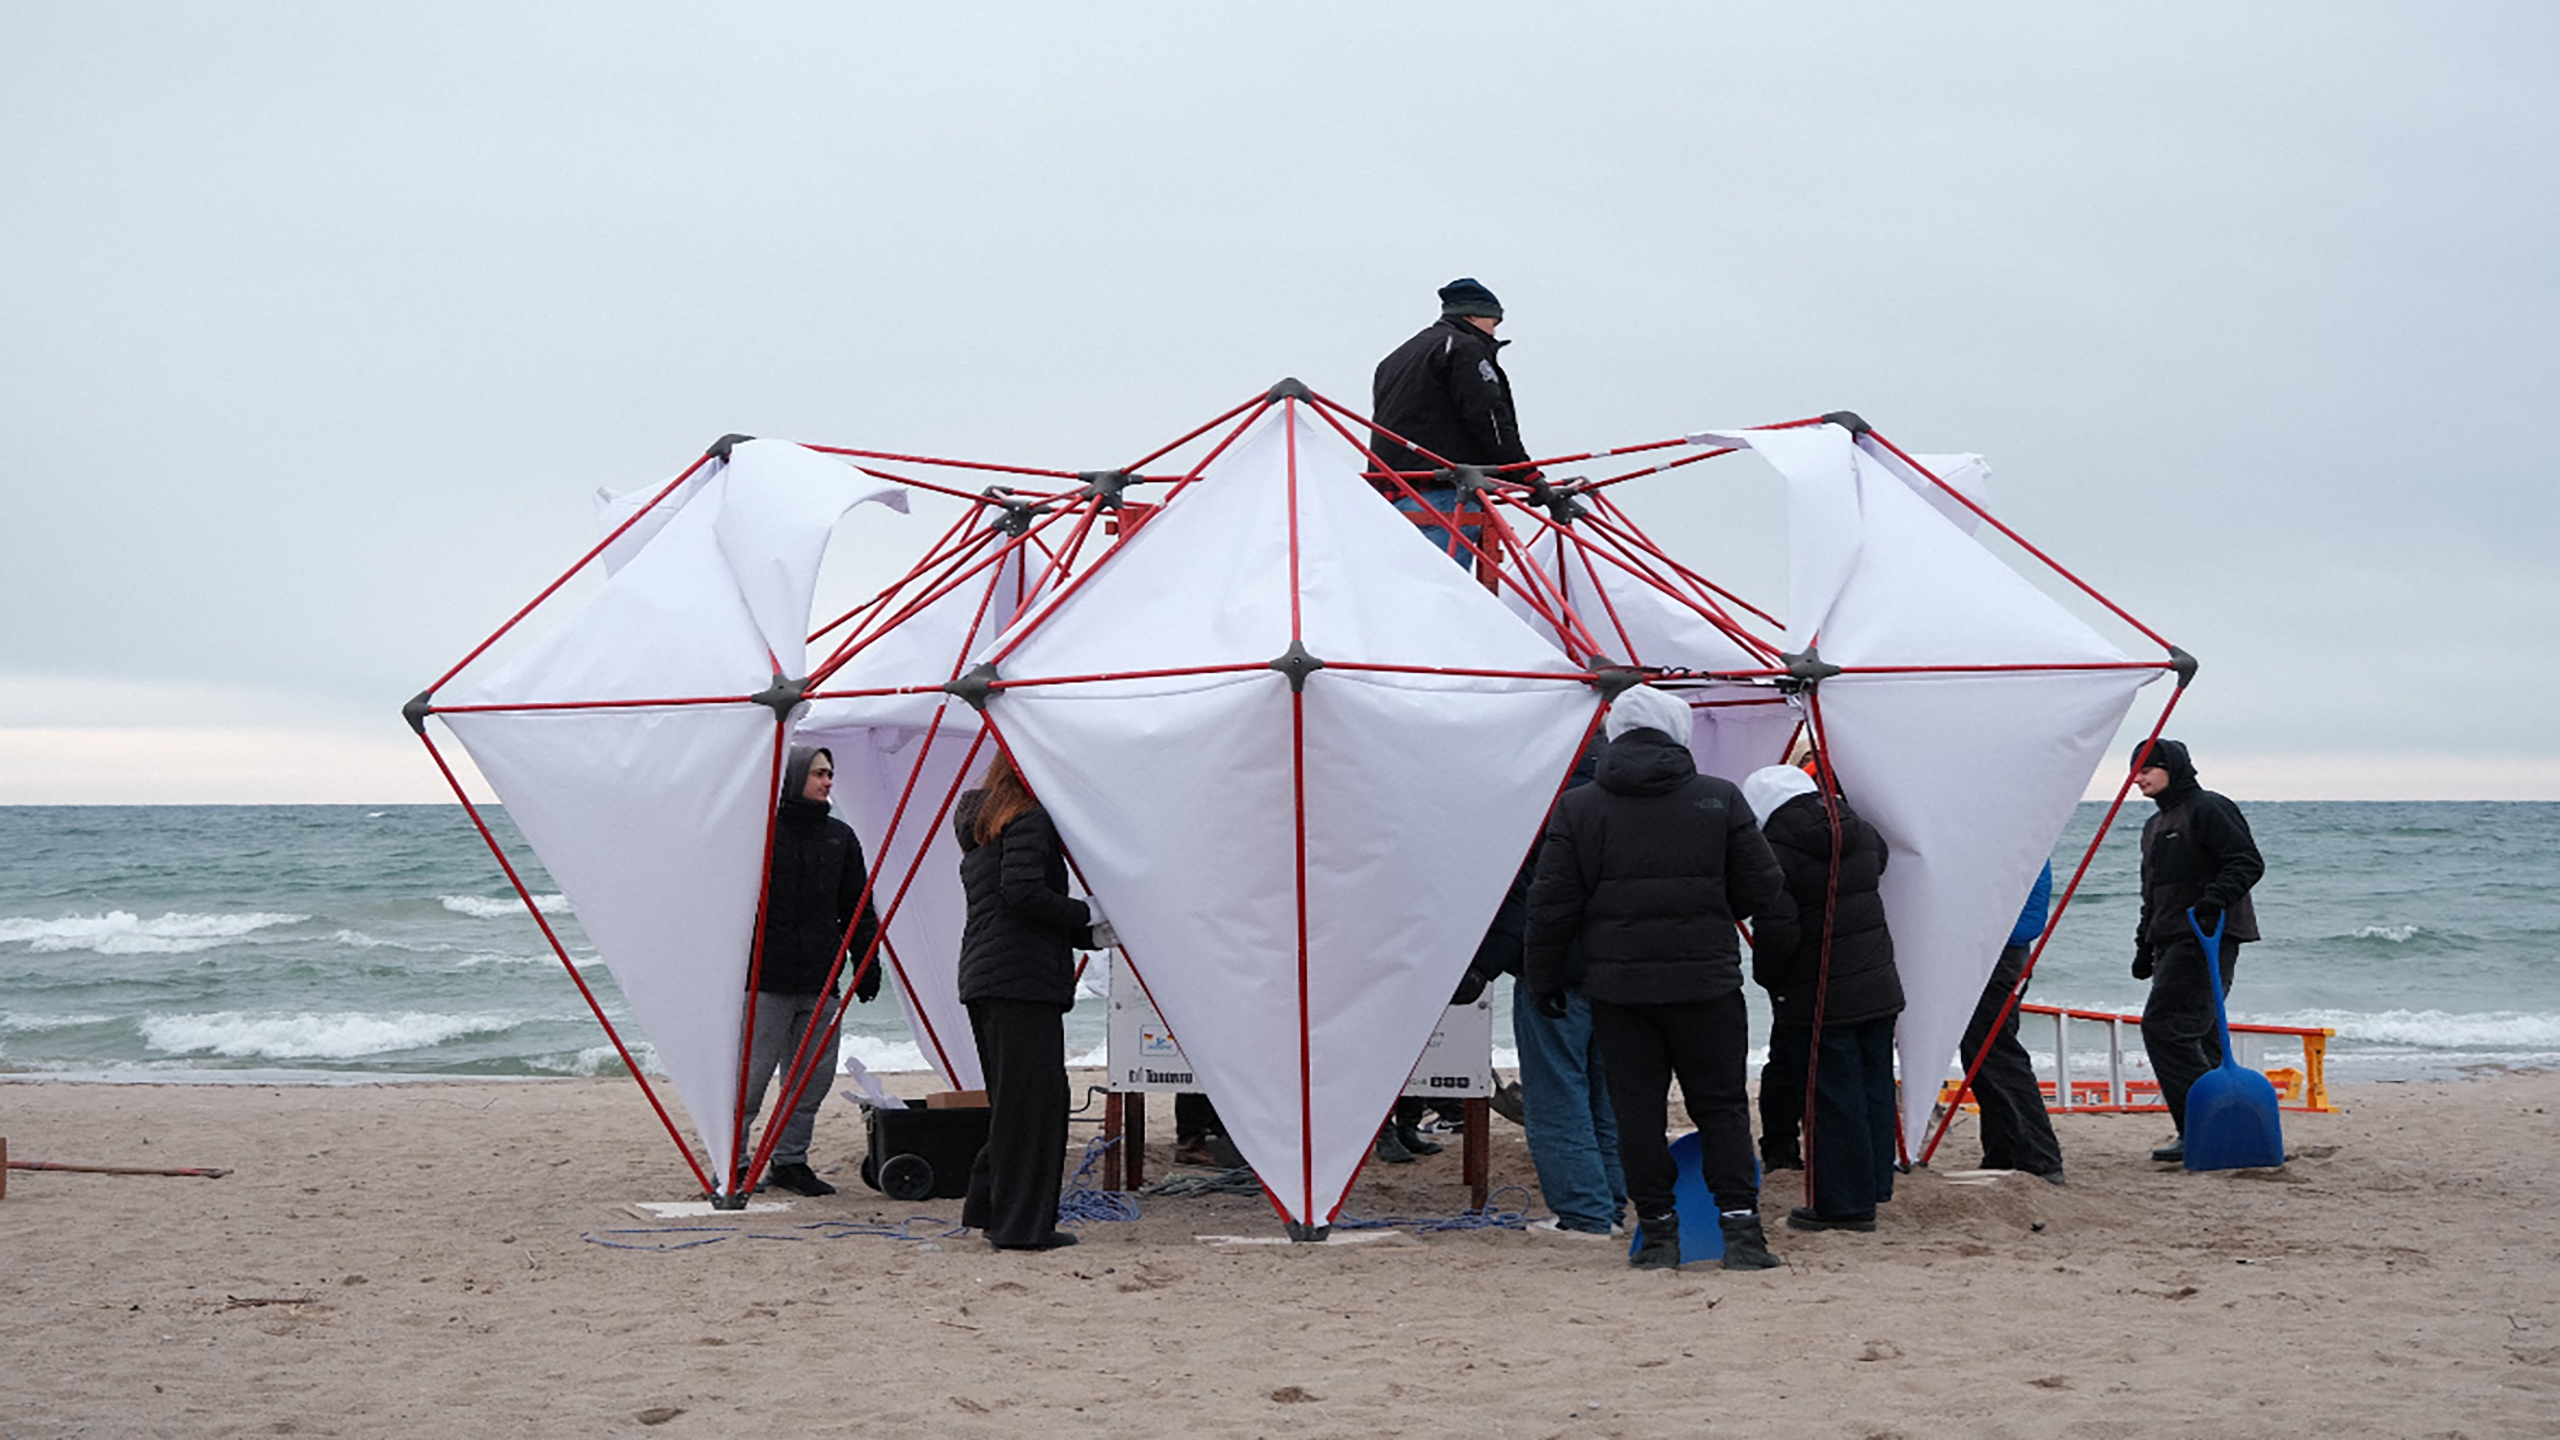 The NOVA team assembles the structure at Woodbine Beach.